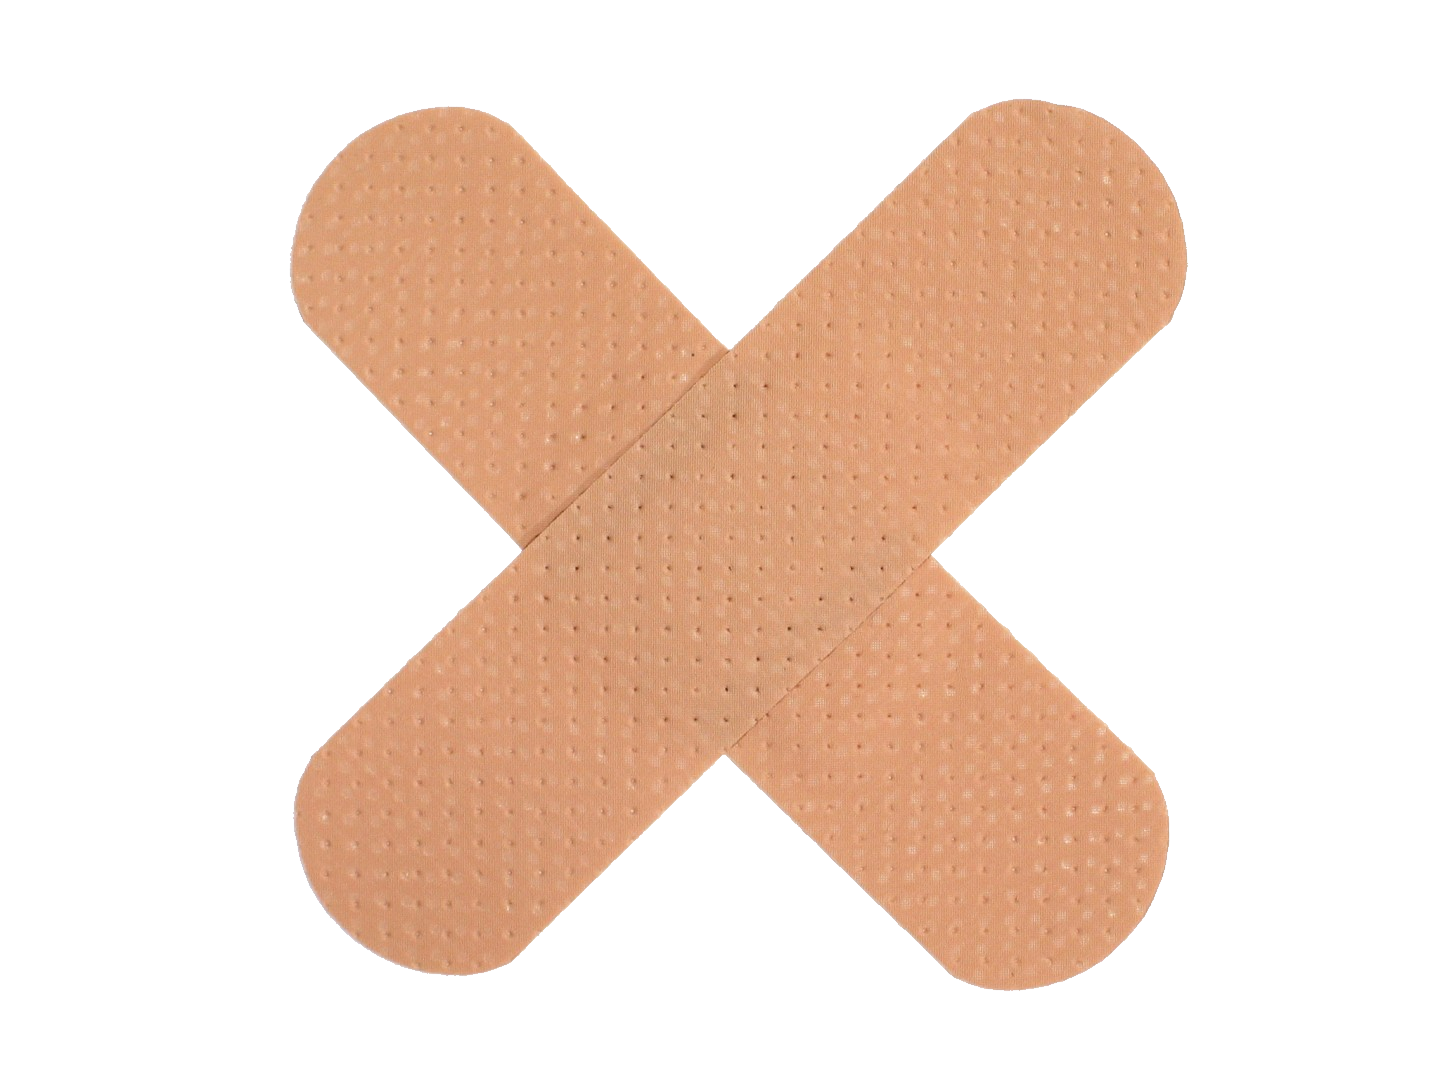 Bandage PNG Image File